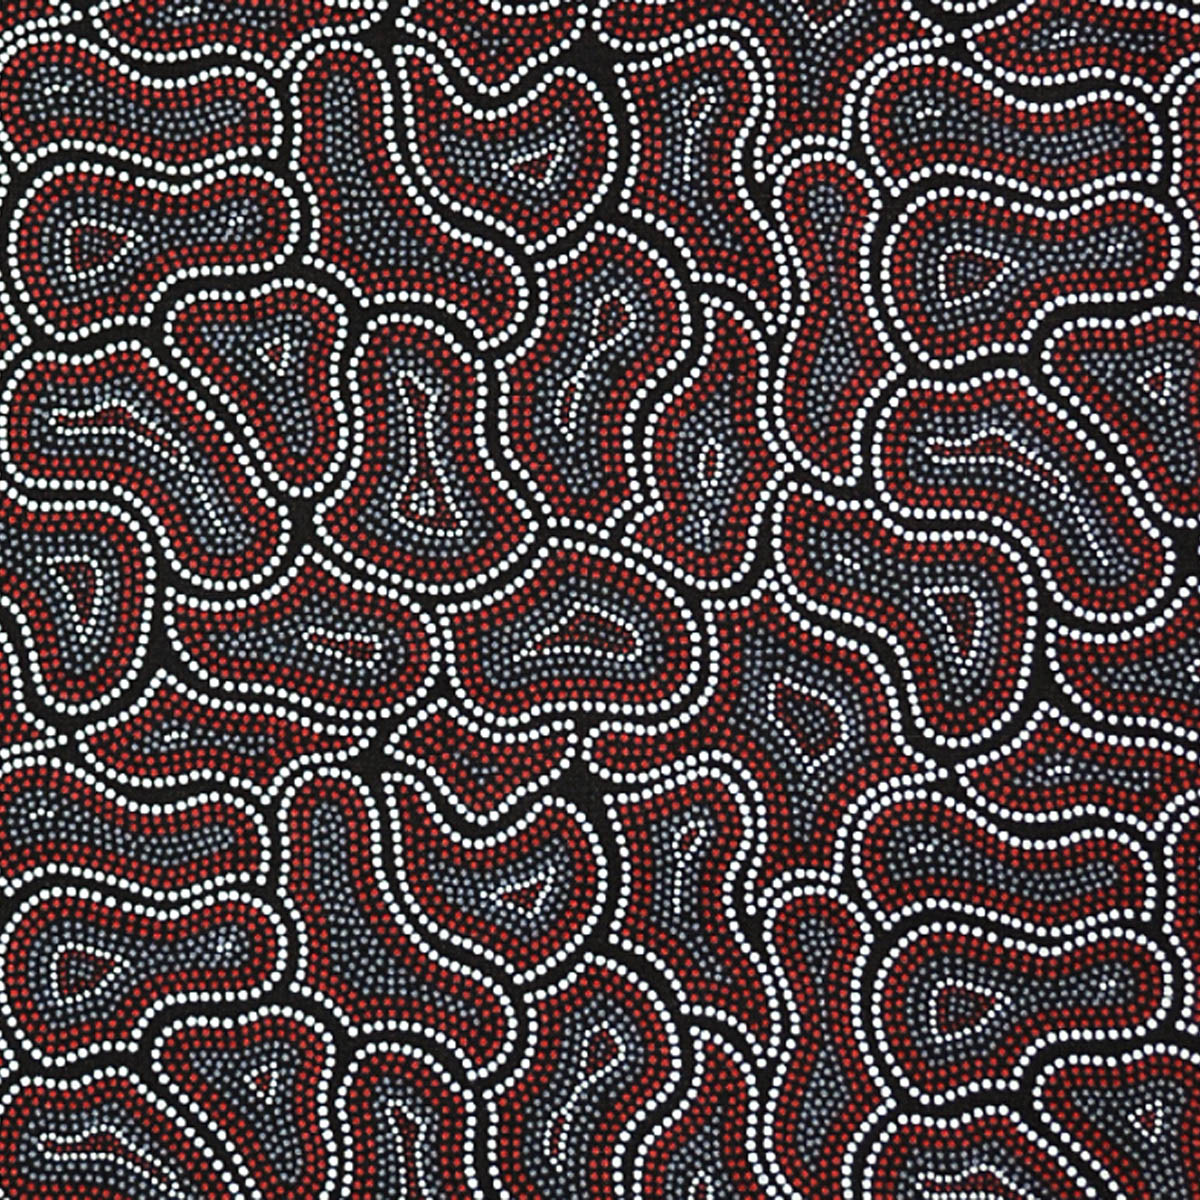 BUSH SEEDS BLACK by Aboriginal Artist CINDY WALLACE